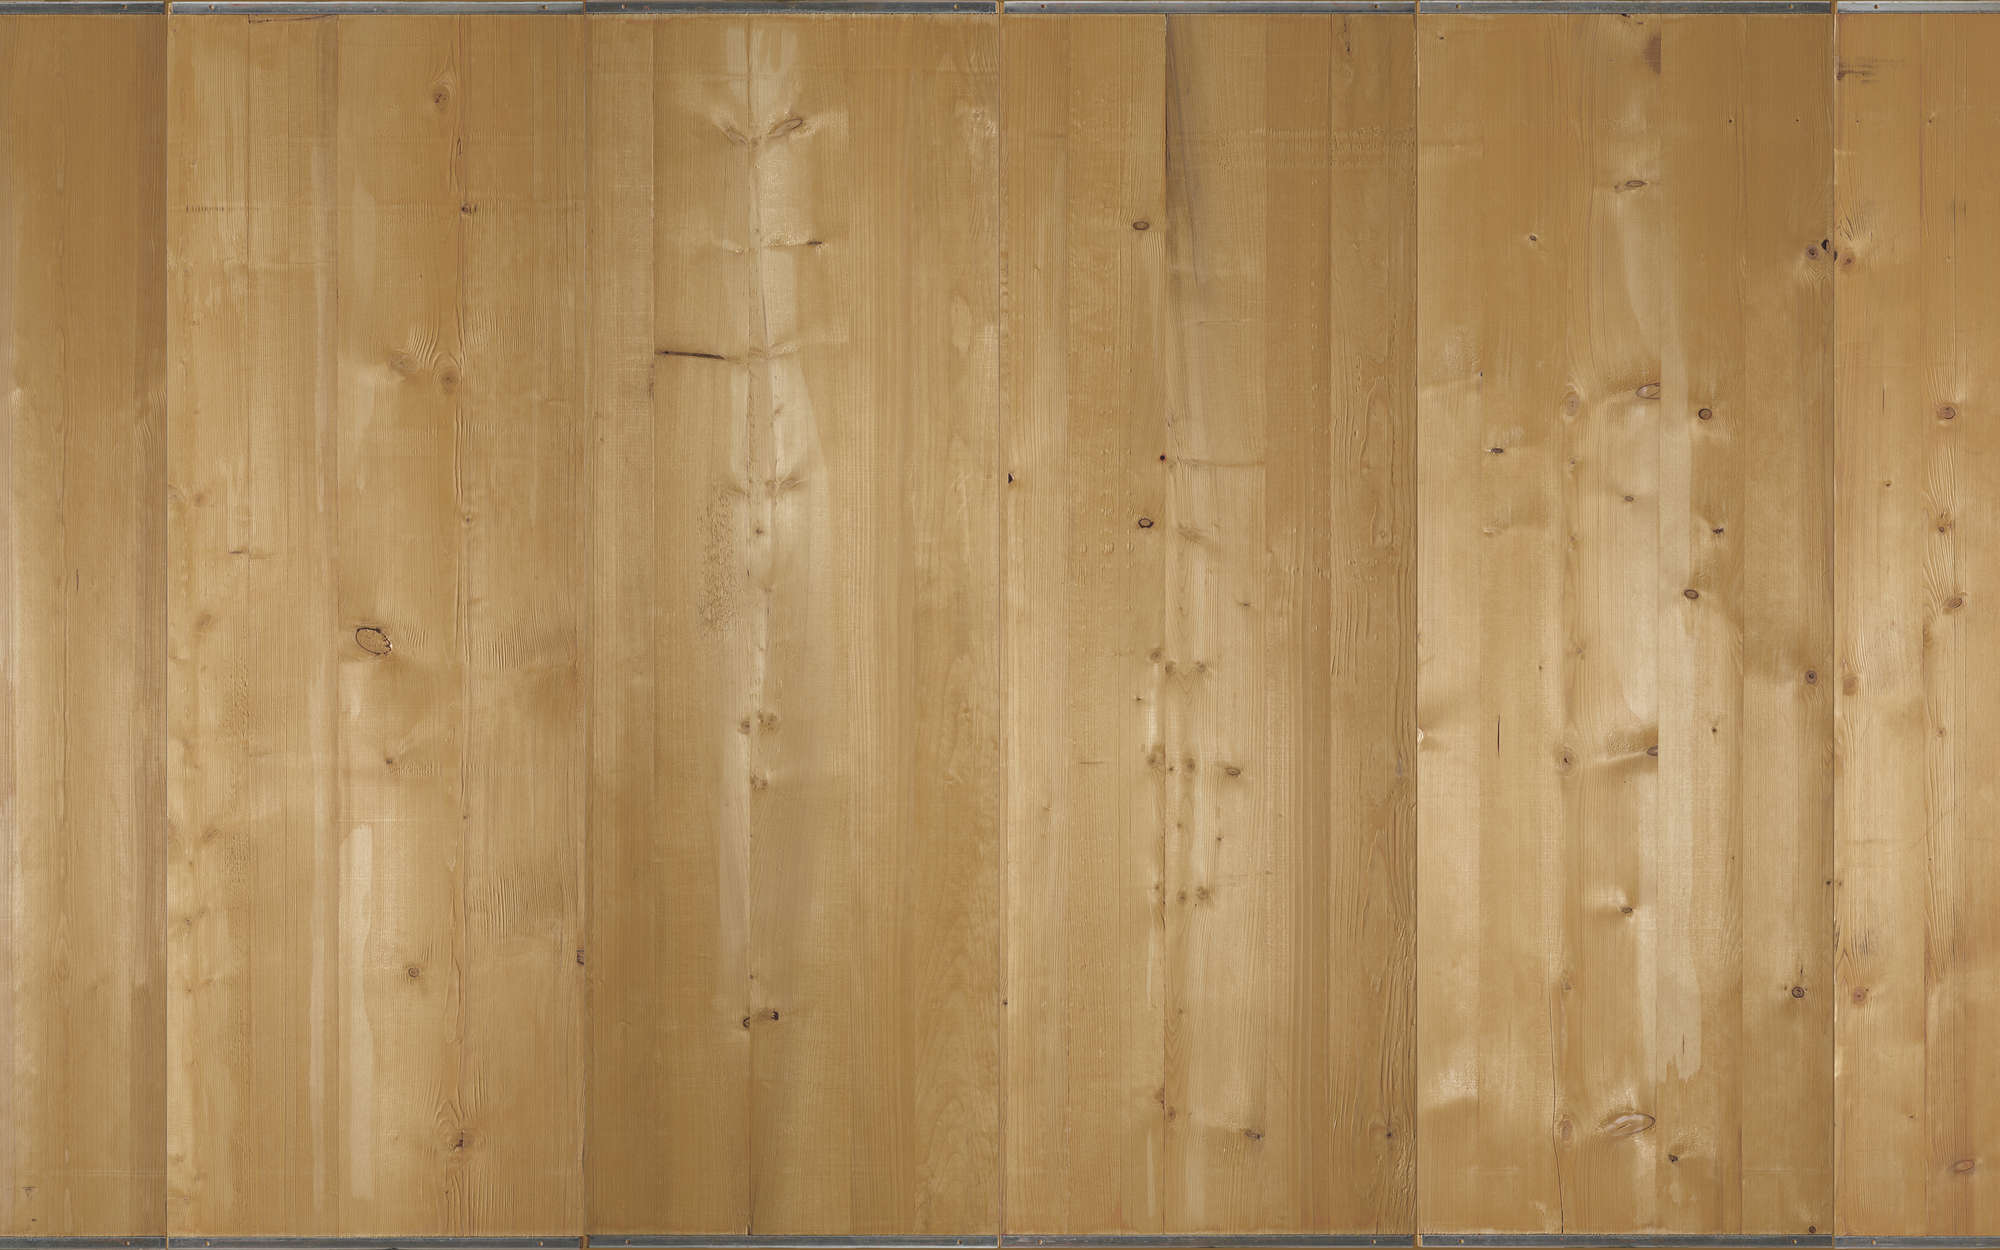             Digital behang licht houten planken - Premium glad vlies
        